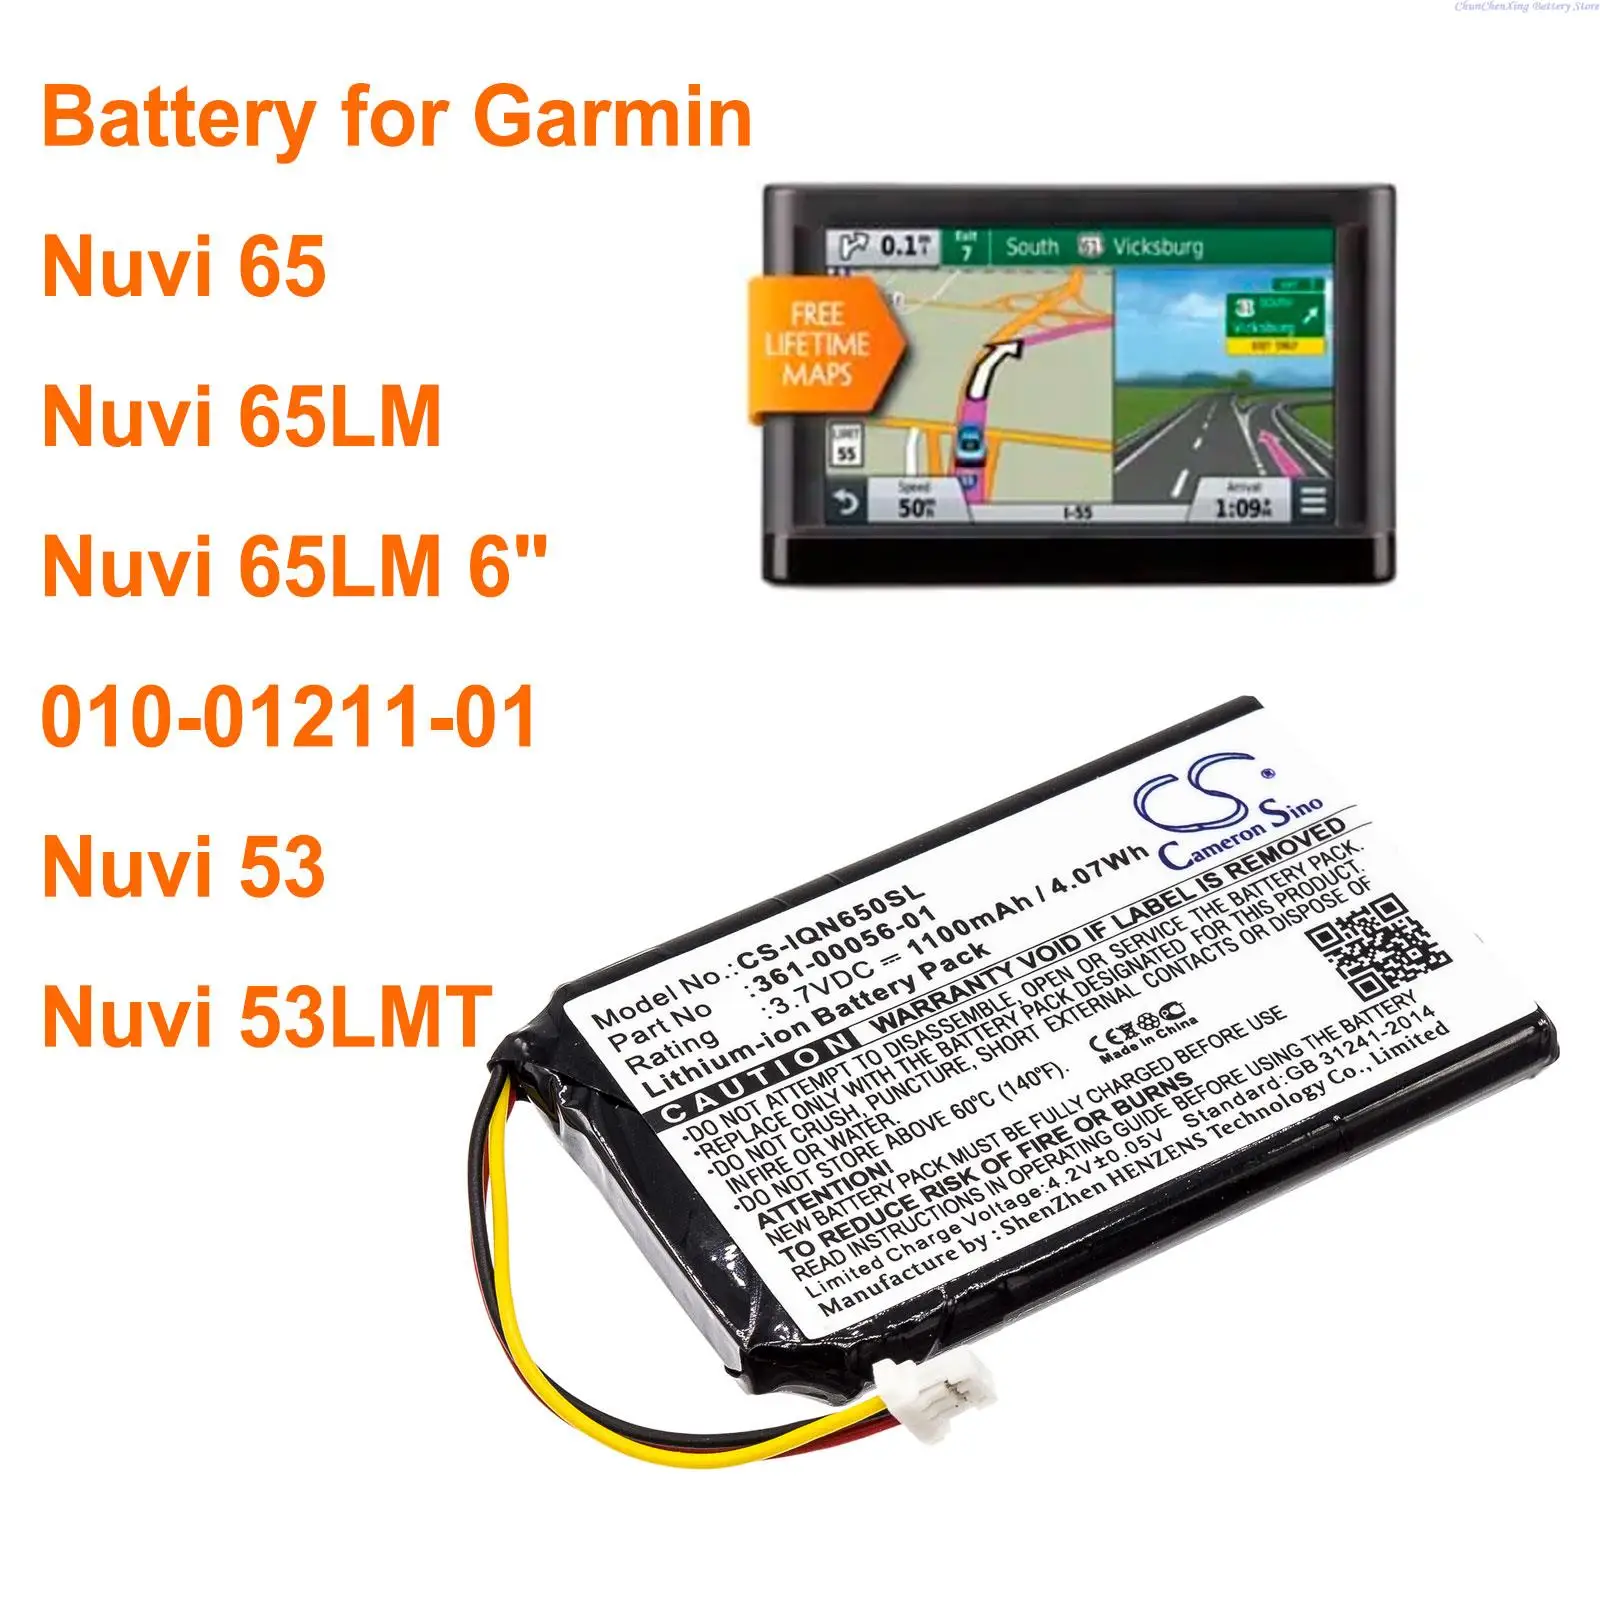 

OrangeYu 1100mAh Navigator Battery 361-00056-01 for Garmin Nuvi 65, Nuvi 65LM, Nuvi 65LM 6", 010-01211-01,Nuvi 53,Nuvi 53LMT